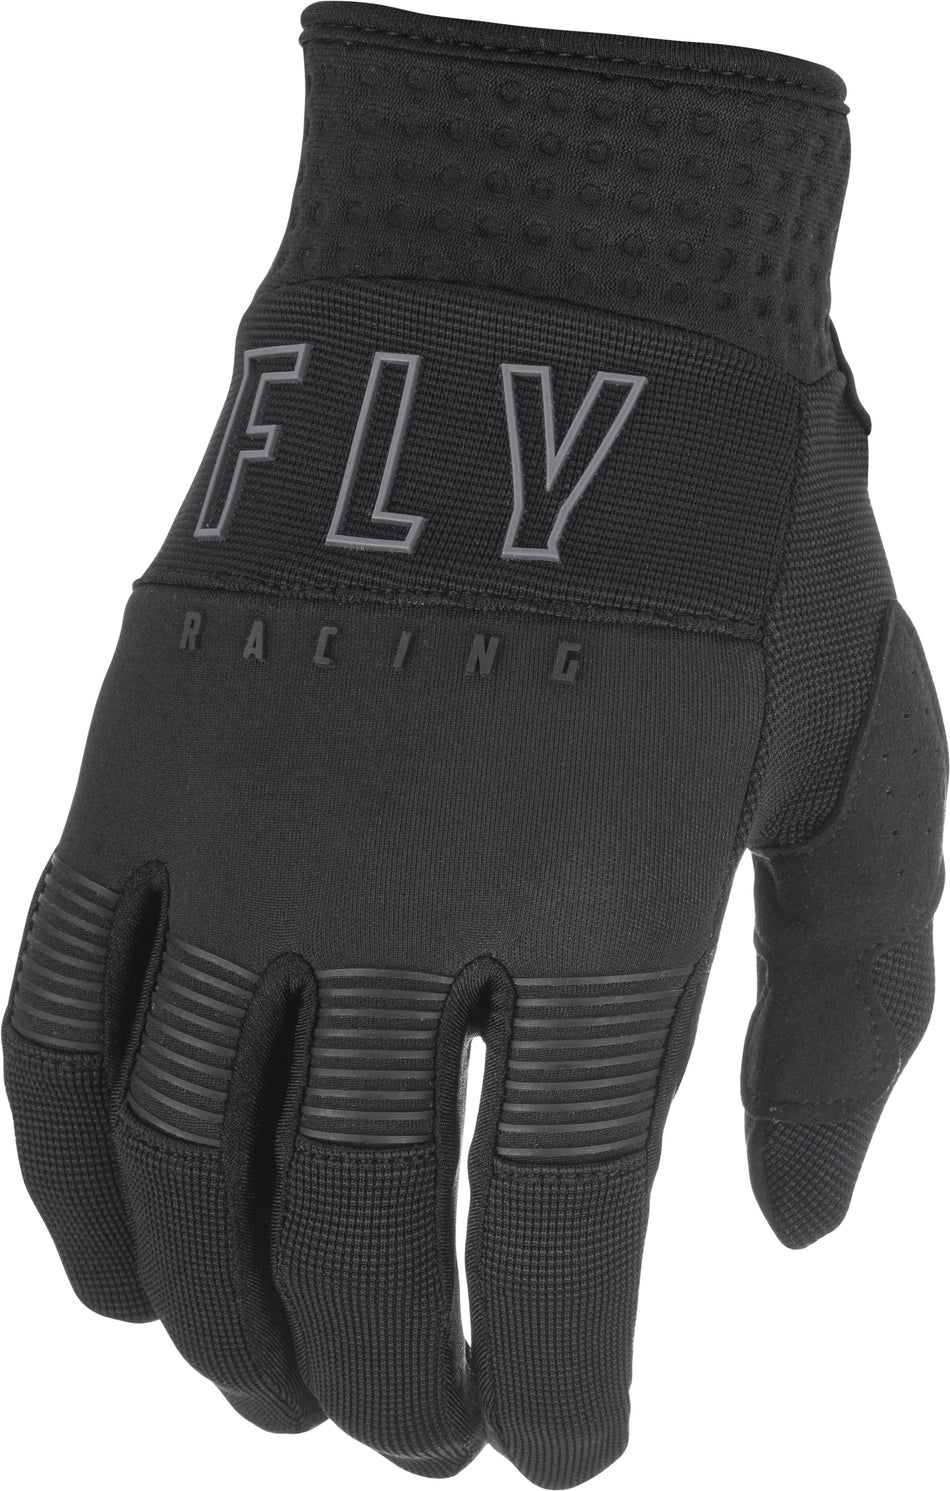 FLY RACING F-16 Gloves Black Sz 07 374-91707